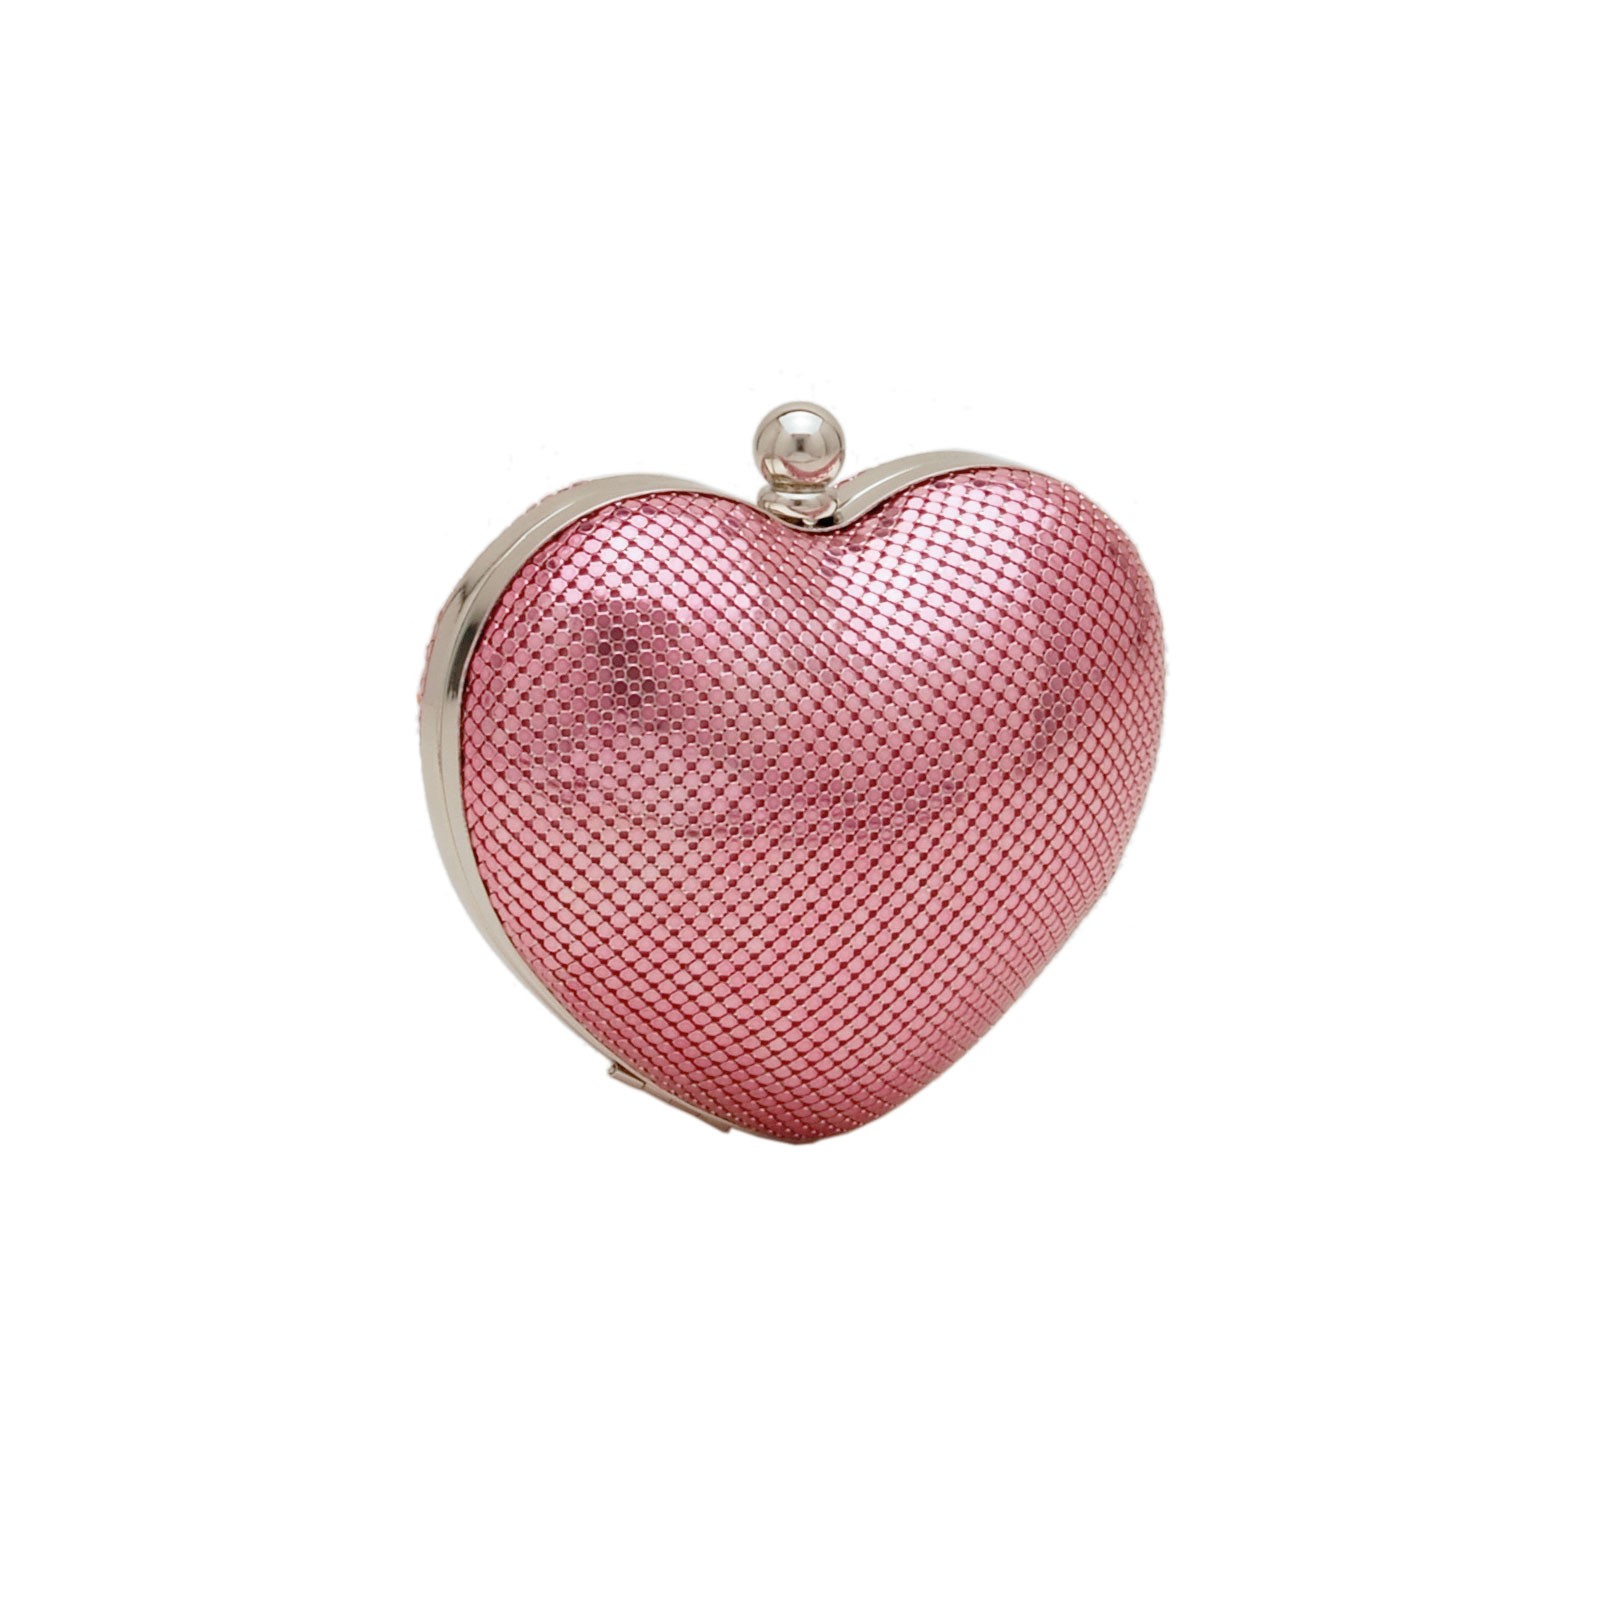 1-5777-Pink-charity-heart-minaudiere-metallic-clutch-handbag-1600